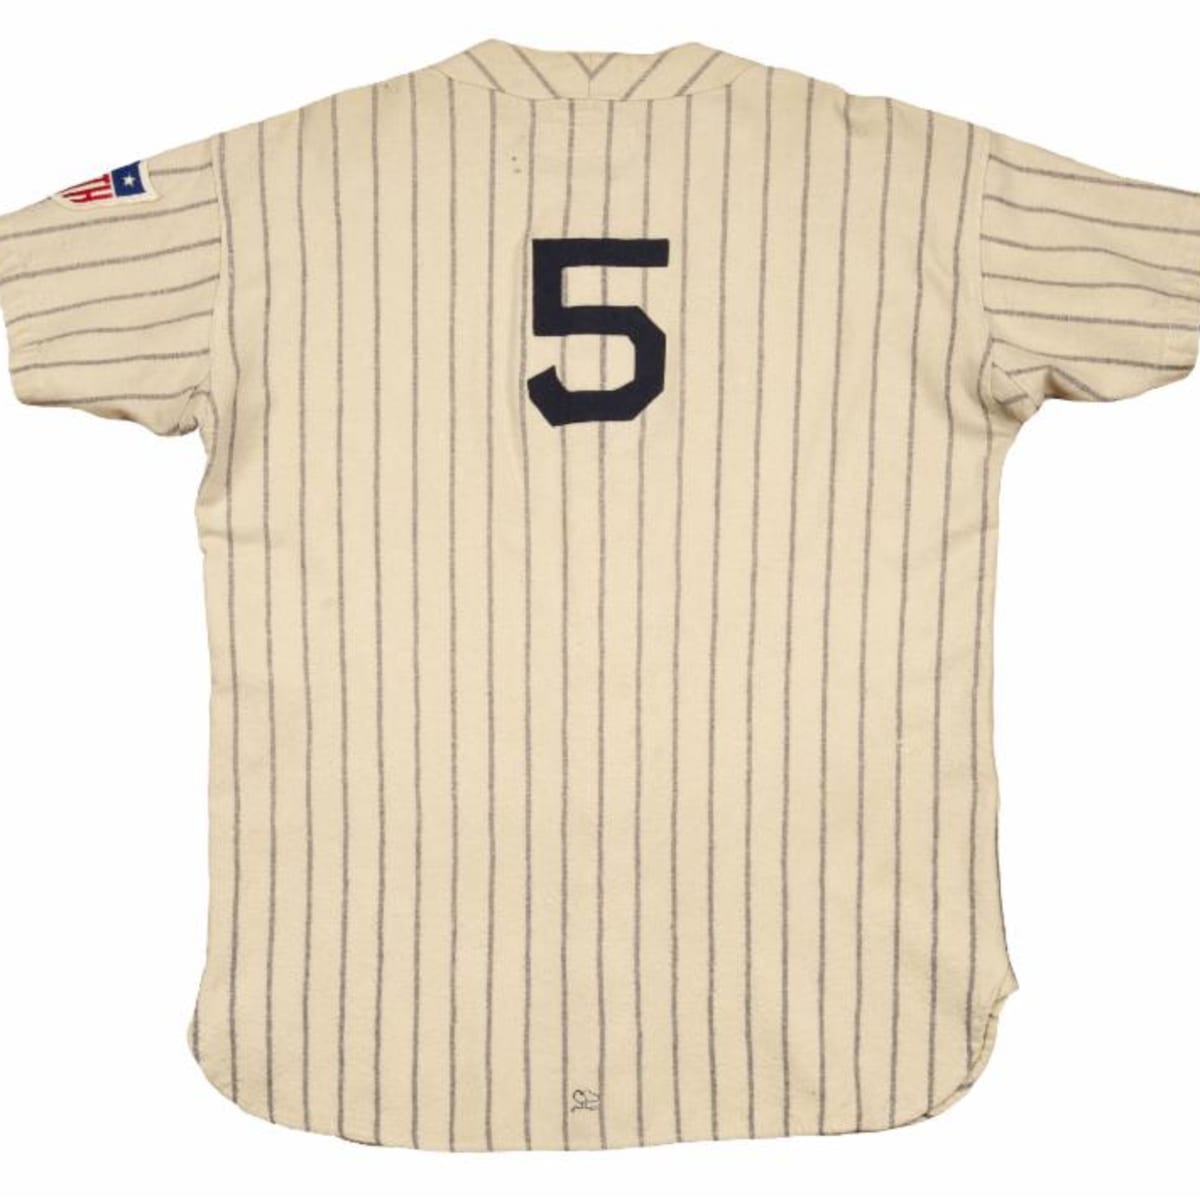 Sold at Auction: Joe DiMaggio SIGNED New York Yankee Uniform Jersey